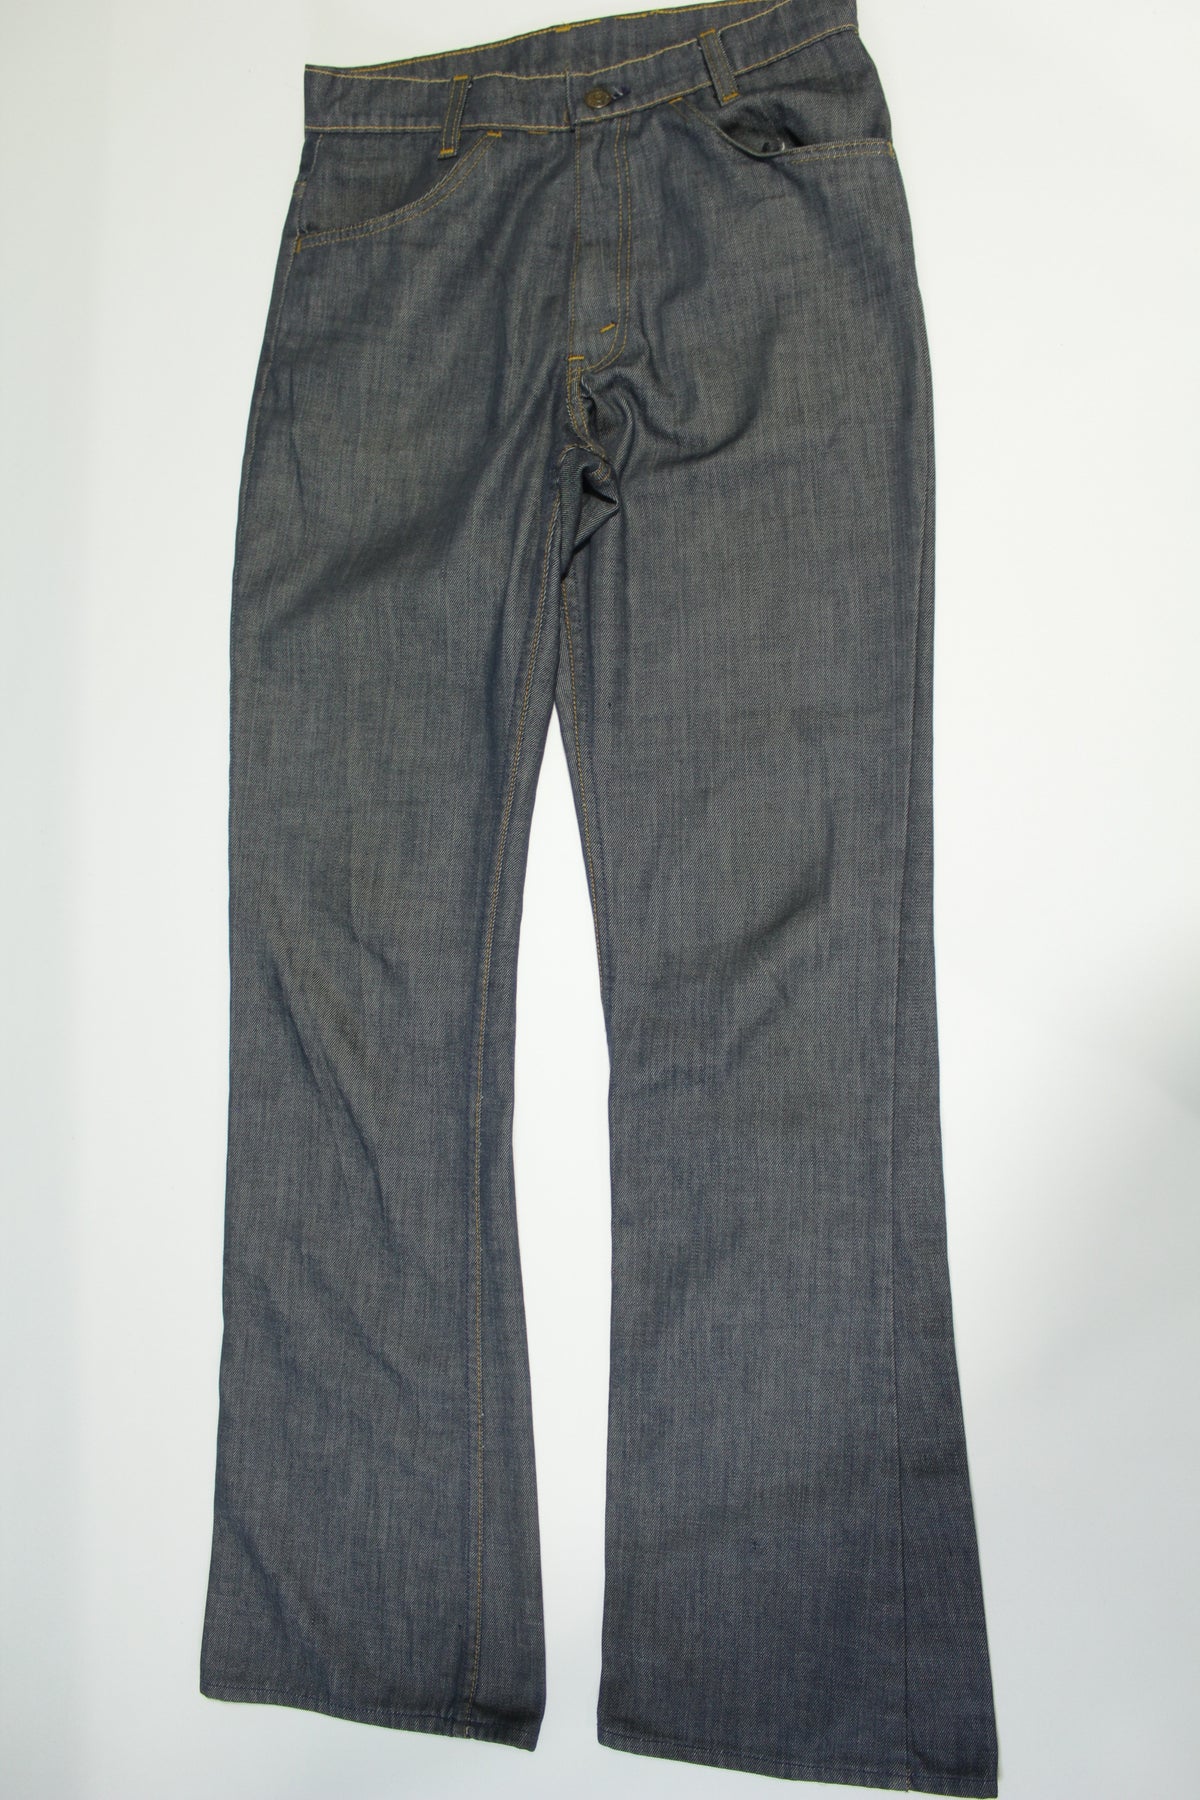 Levis Vintage 70's Orange Tab Talon 42 Zipper Flare Leg Denim Jeans